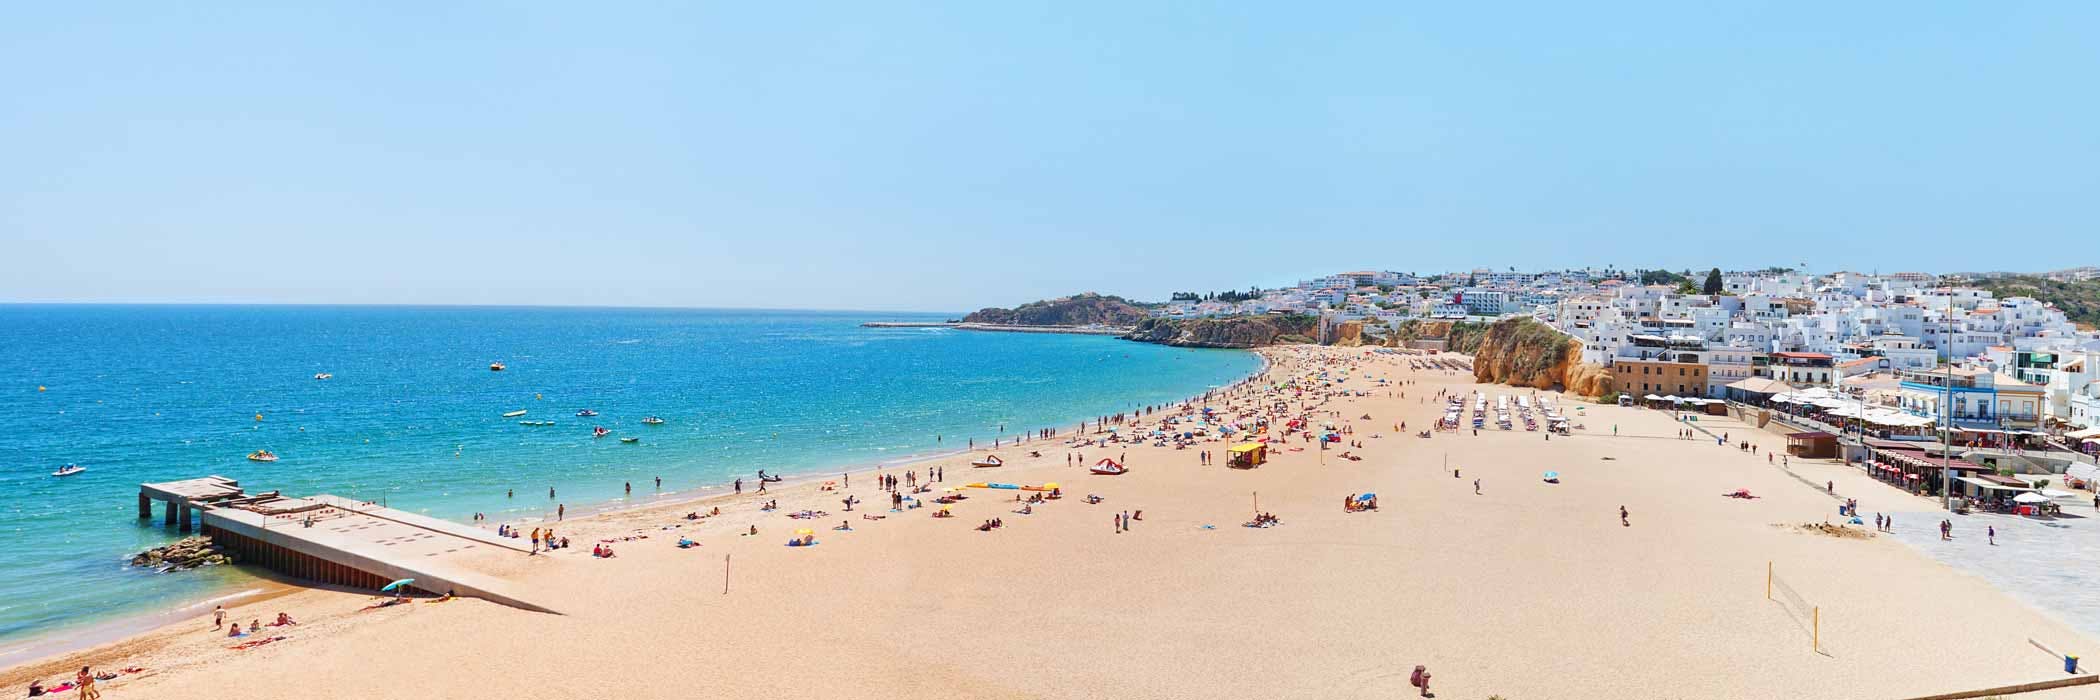 Albufeira Beach - Holidays To Portugal